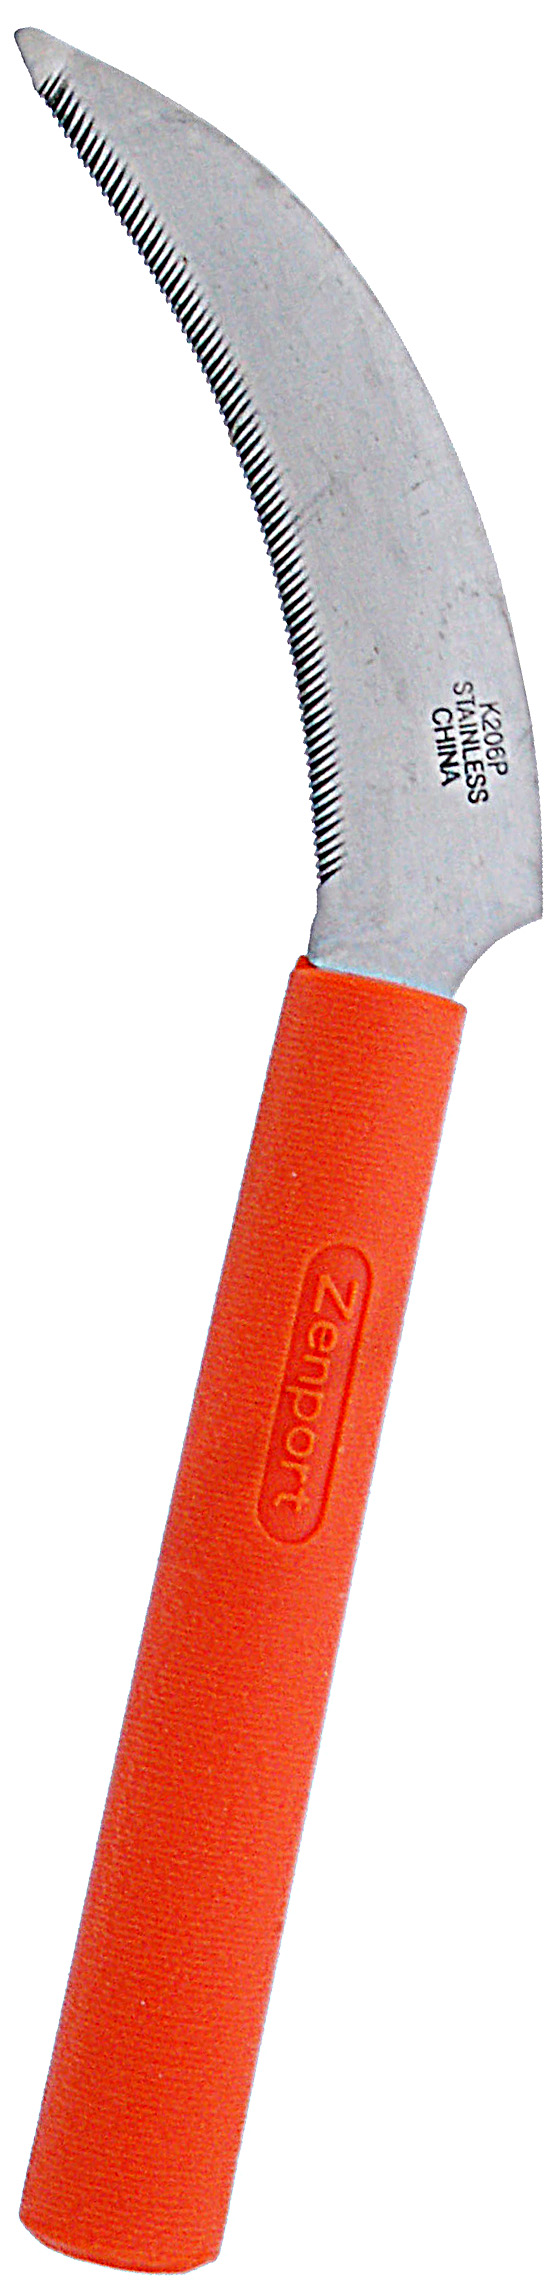 Zenport Sickle K206P Berry Knife/Weeding, Orange Plastic Handle, A+ Grade, Stainless Steel, Light Serration, 4.3-Inch Blade